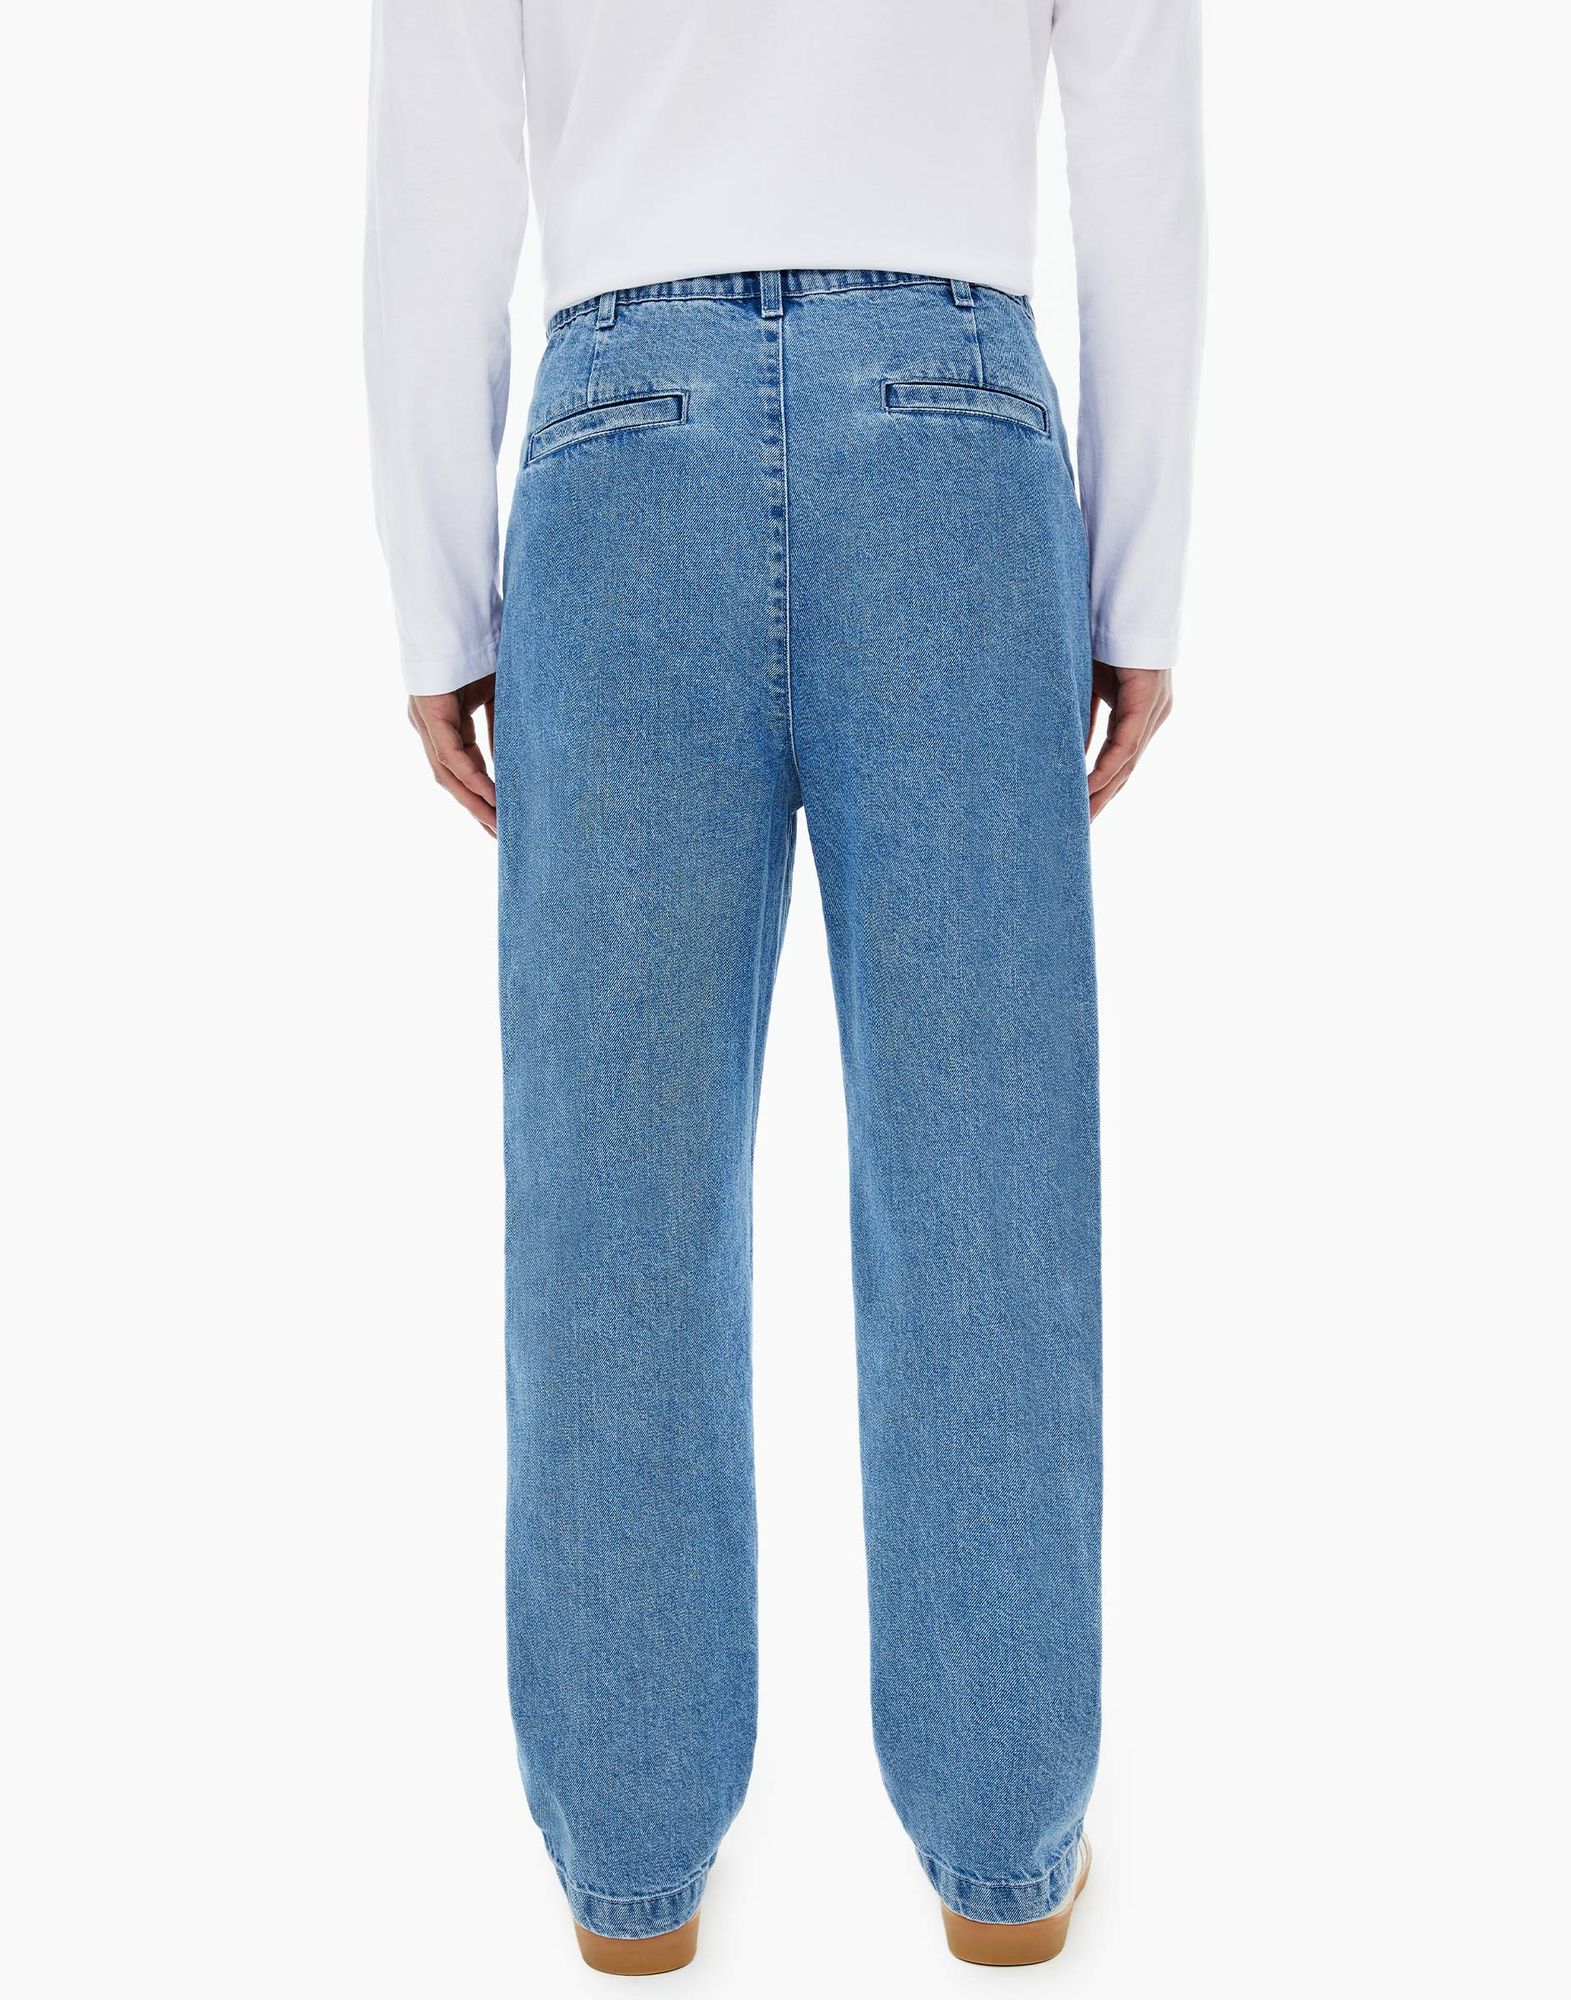 Прямые джинсы с защипами Straight pleated-2